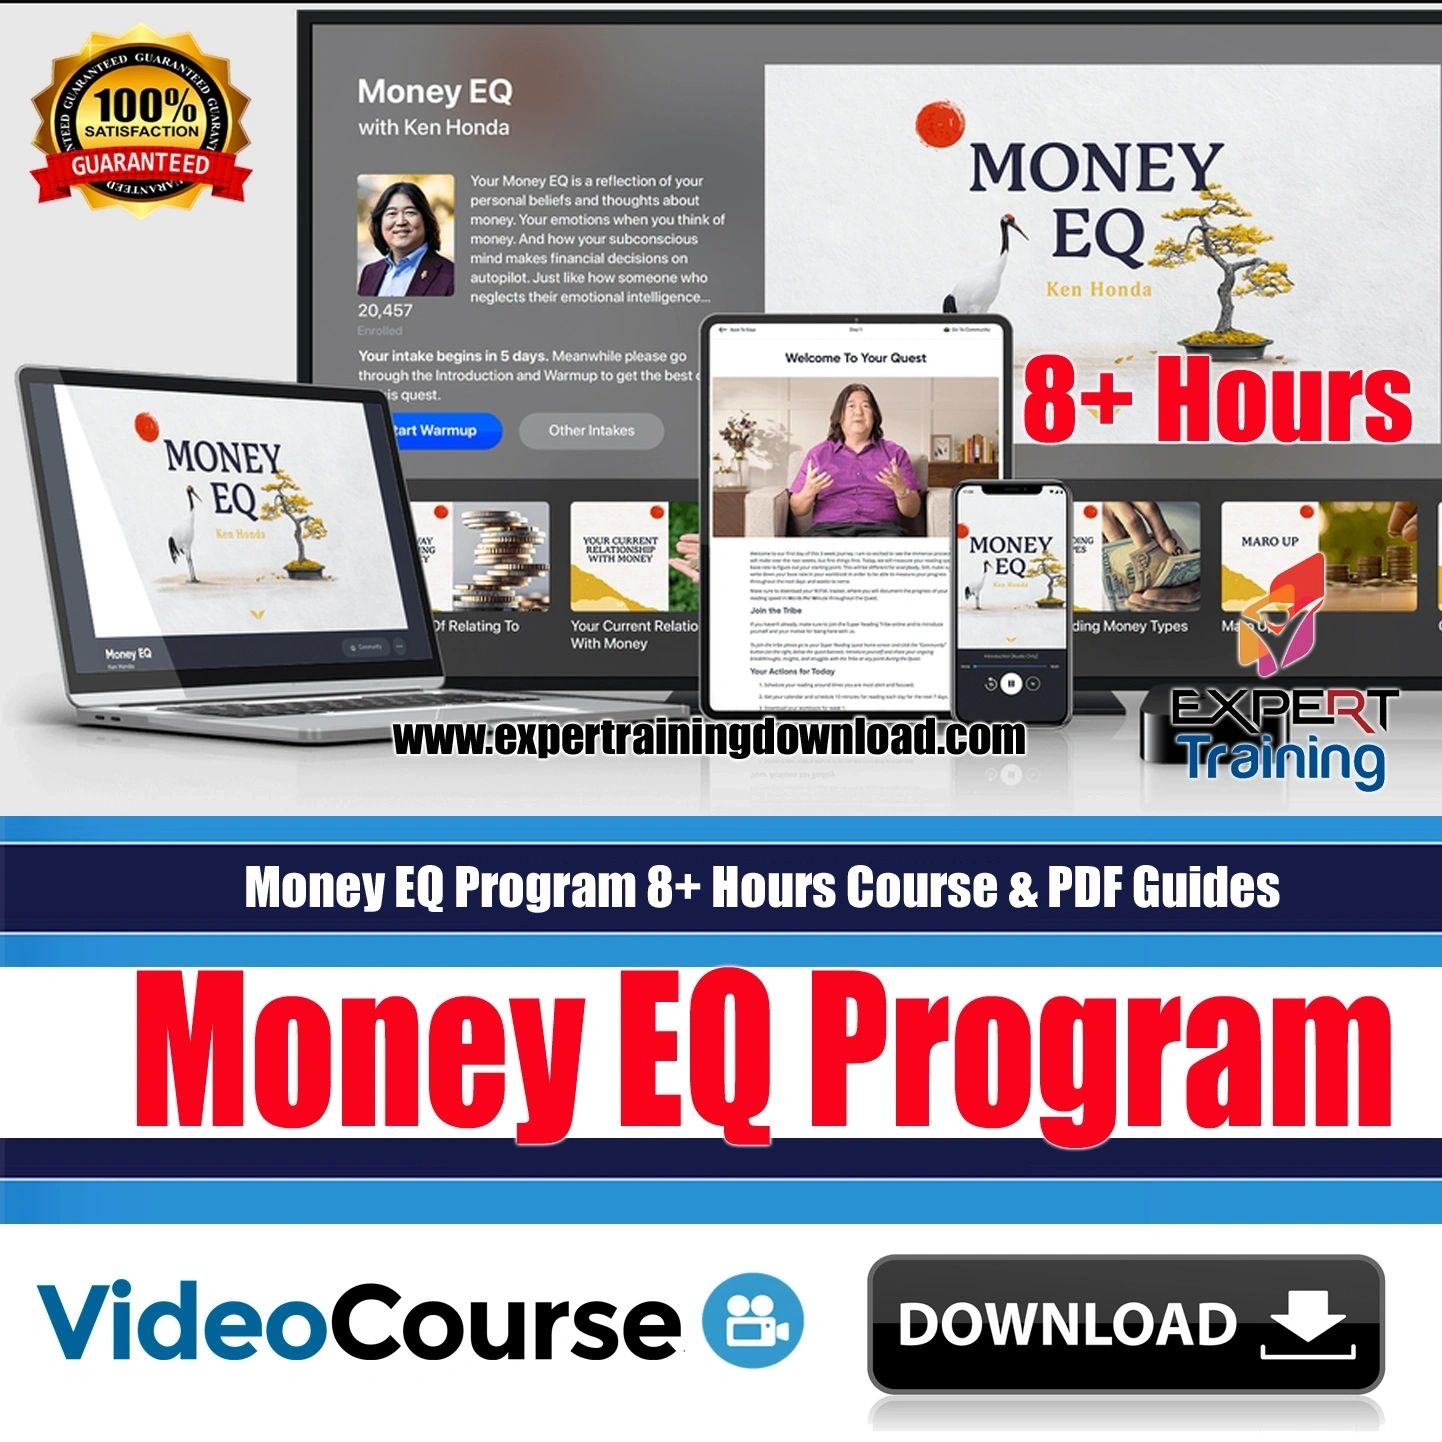 Money EQ Program 8+ Hours Course & PDF Guides